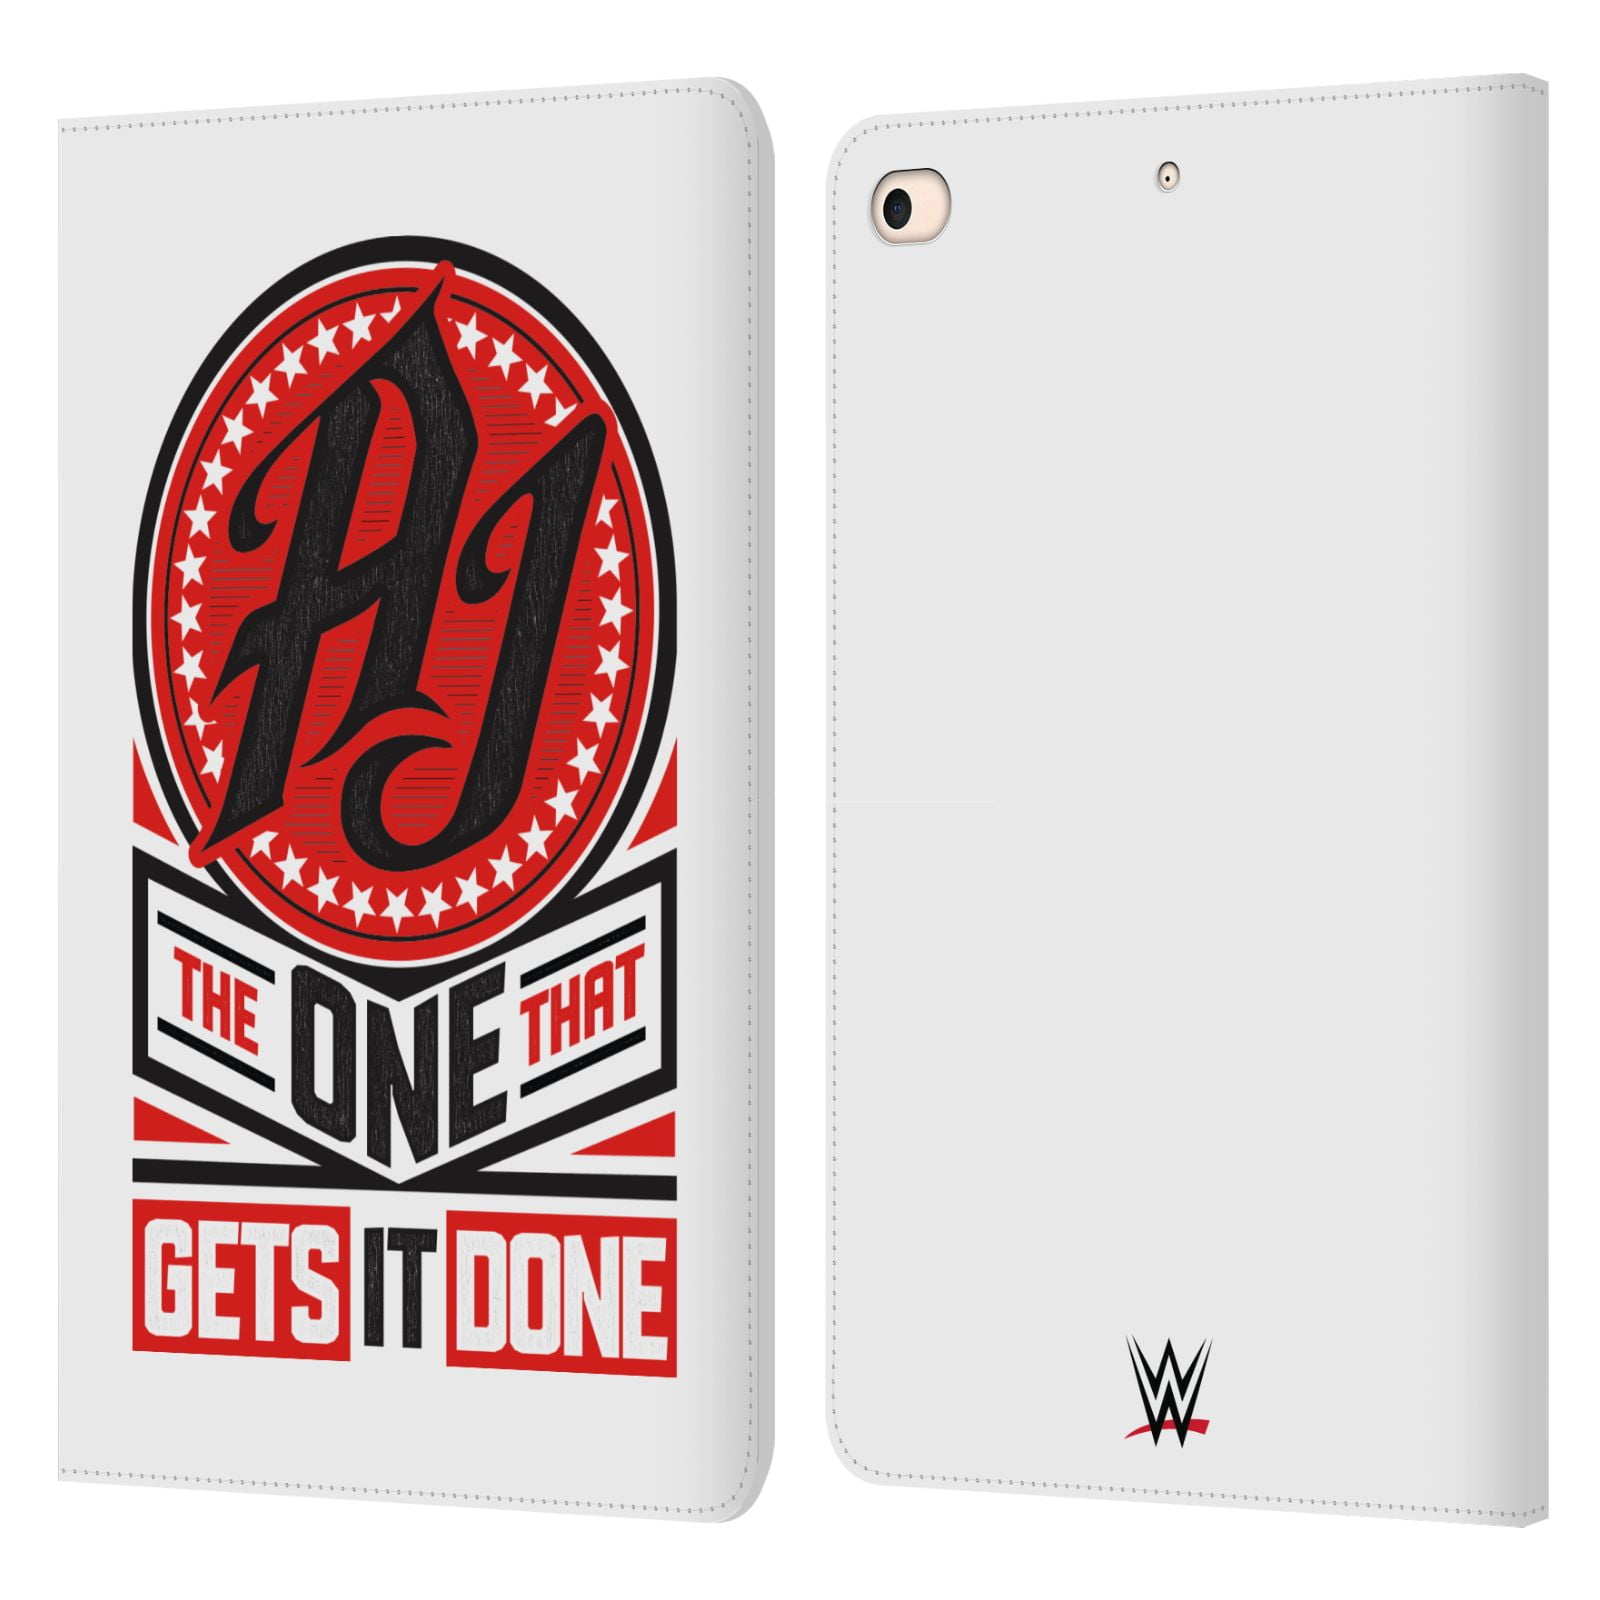 Mini 3 Mini 2 Official WWE LED Image 2017 Aj Styles Leather Book Wallet Case Cover for iPad Mini 1 